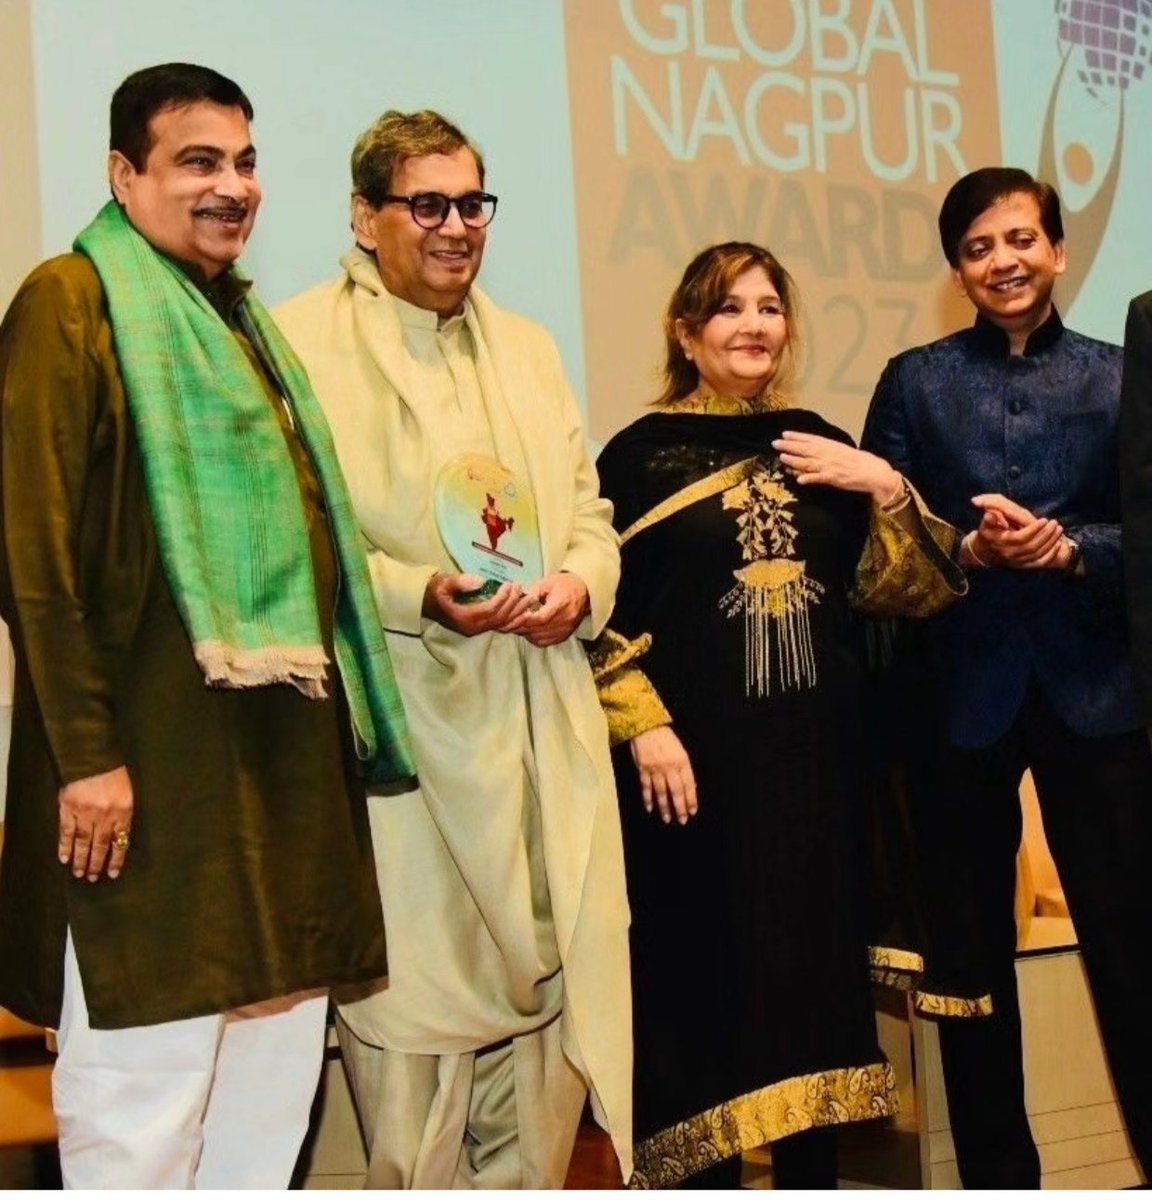 Heartiest Congratulations to @SubhashGhai1 on receiving the Global Nagpur Award.